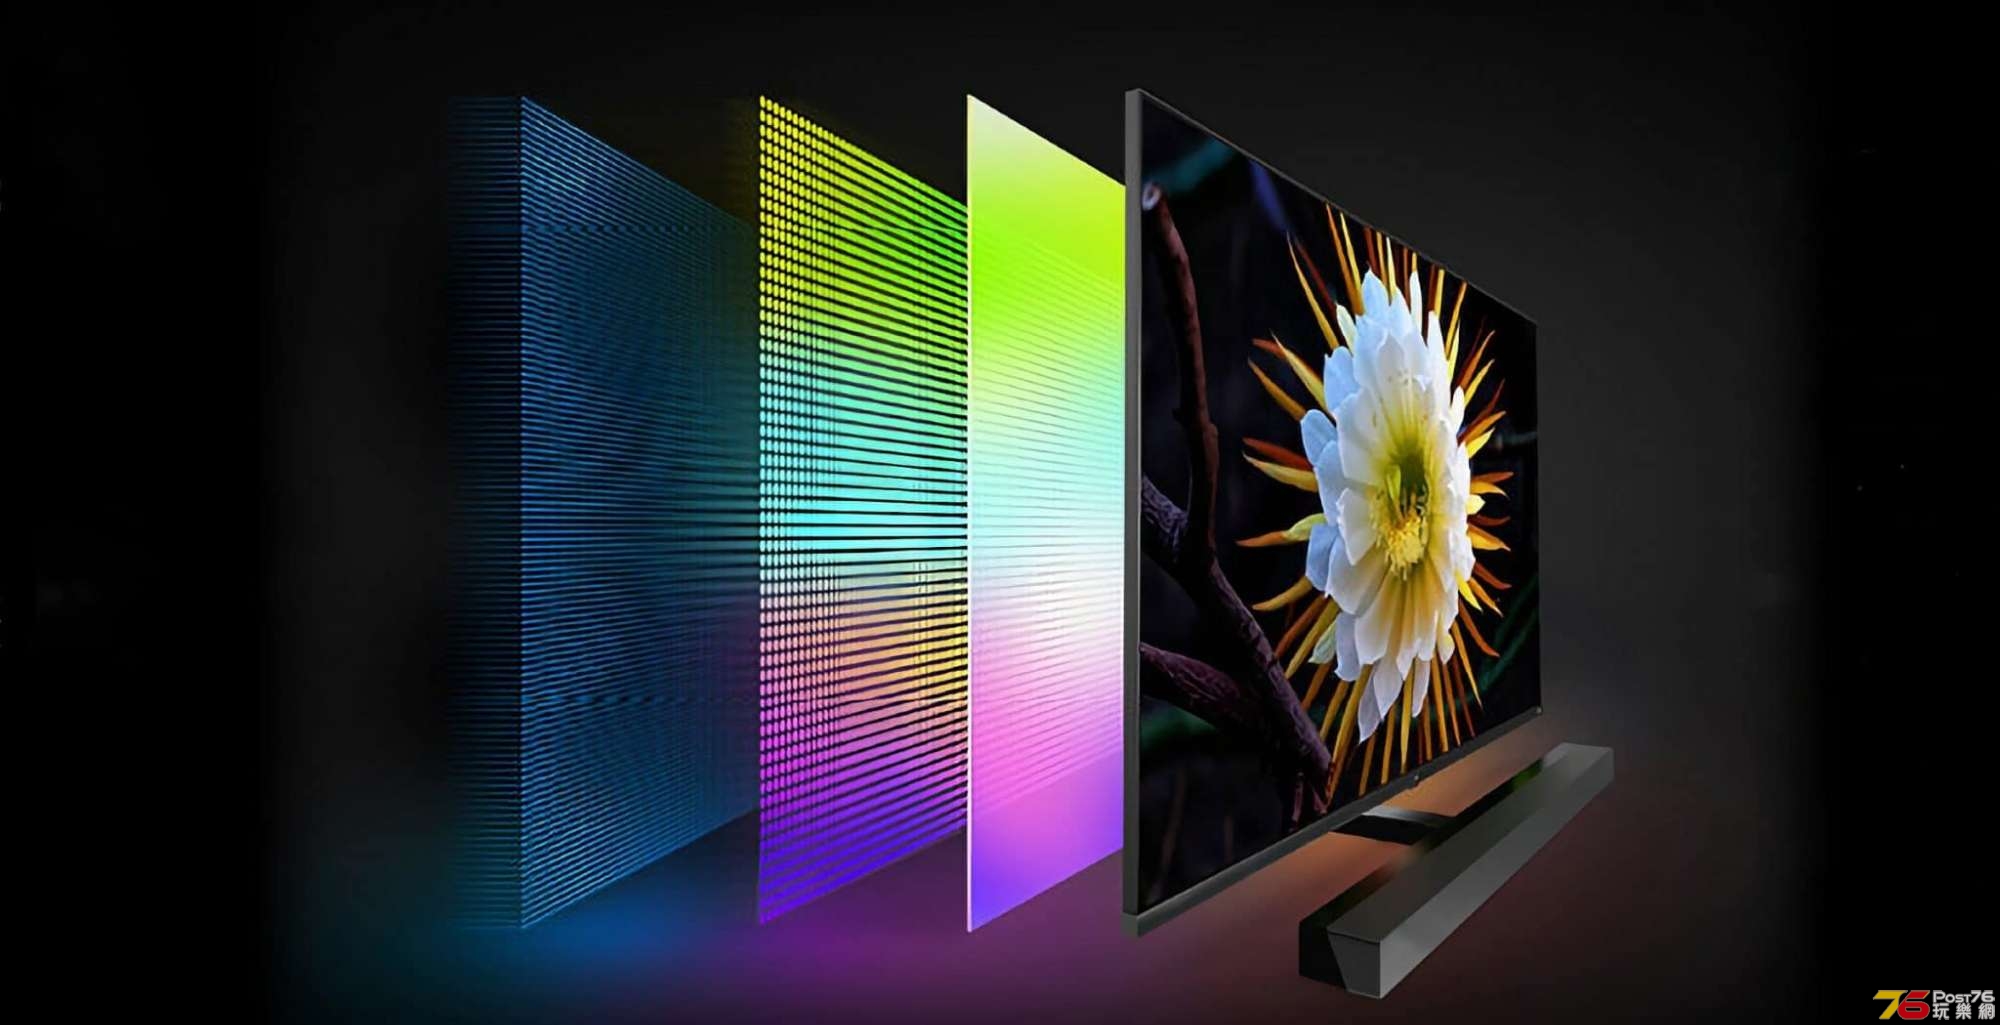 Samsungs-QD-OLED-TV-coming-in-2022-according-to-rumors.jpg